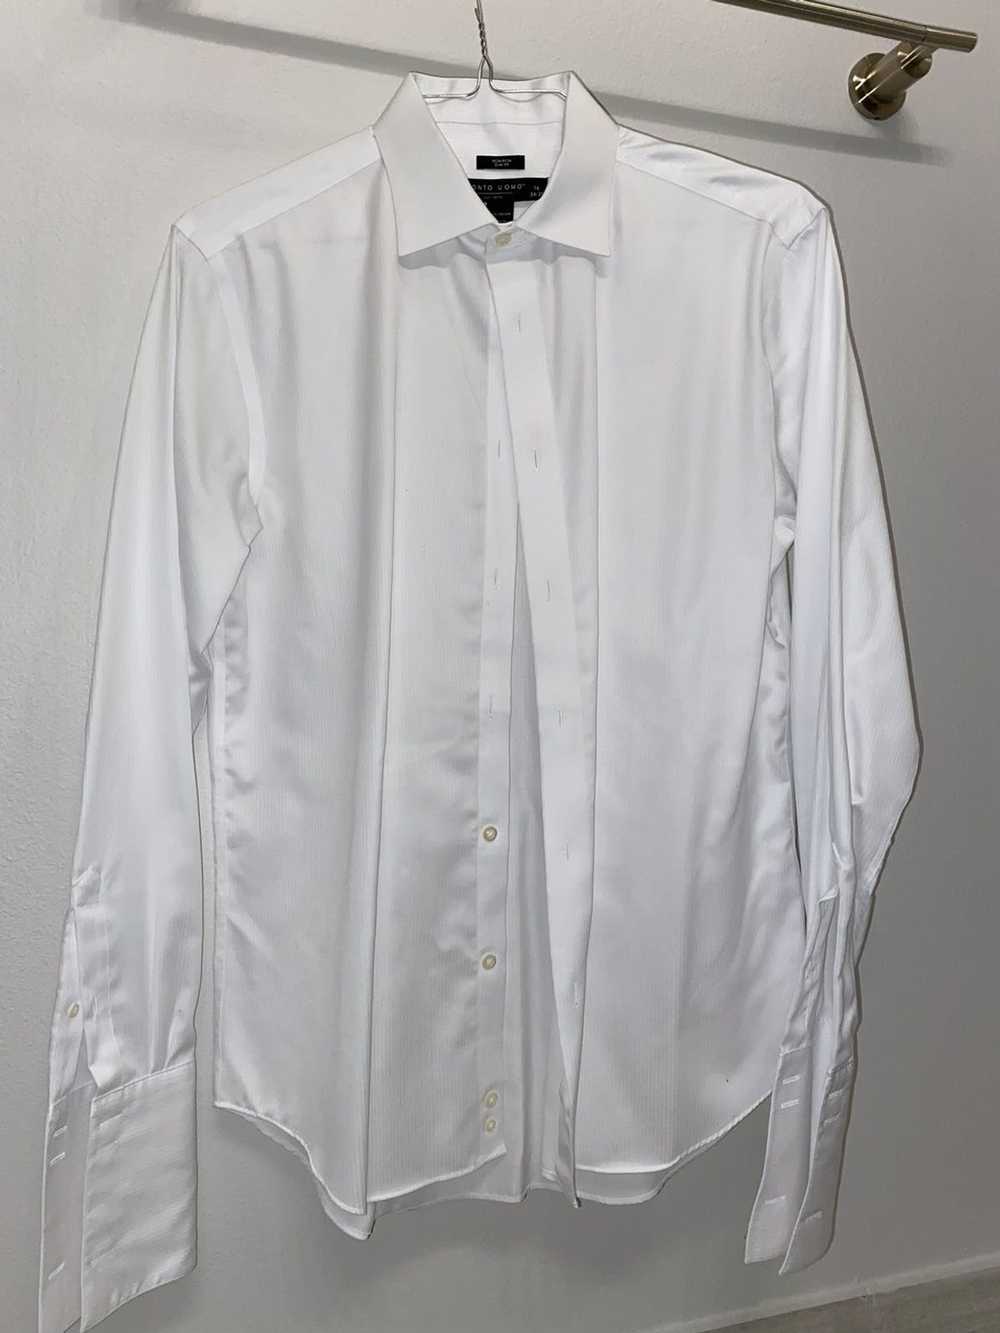 Asos Tuxedo Set w/ Tuxedo Shirt - image 6